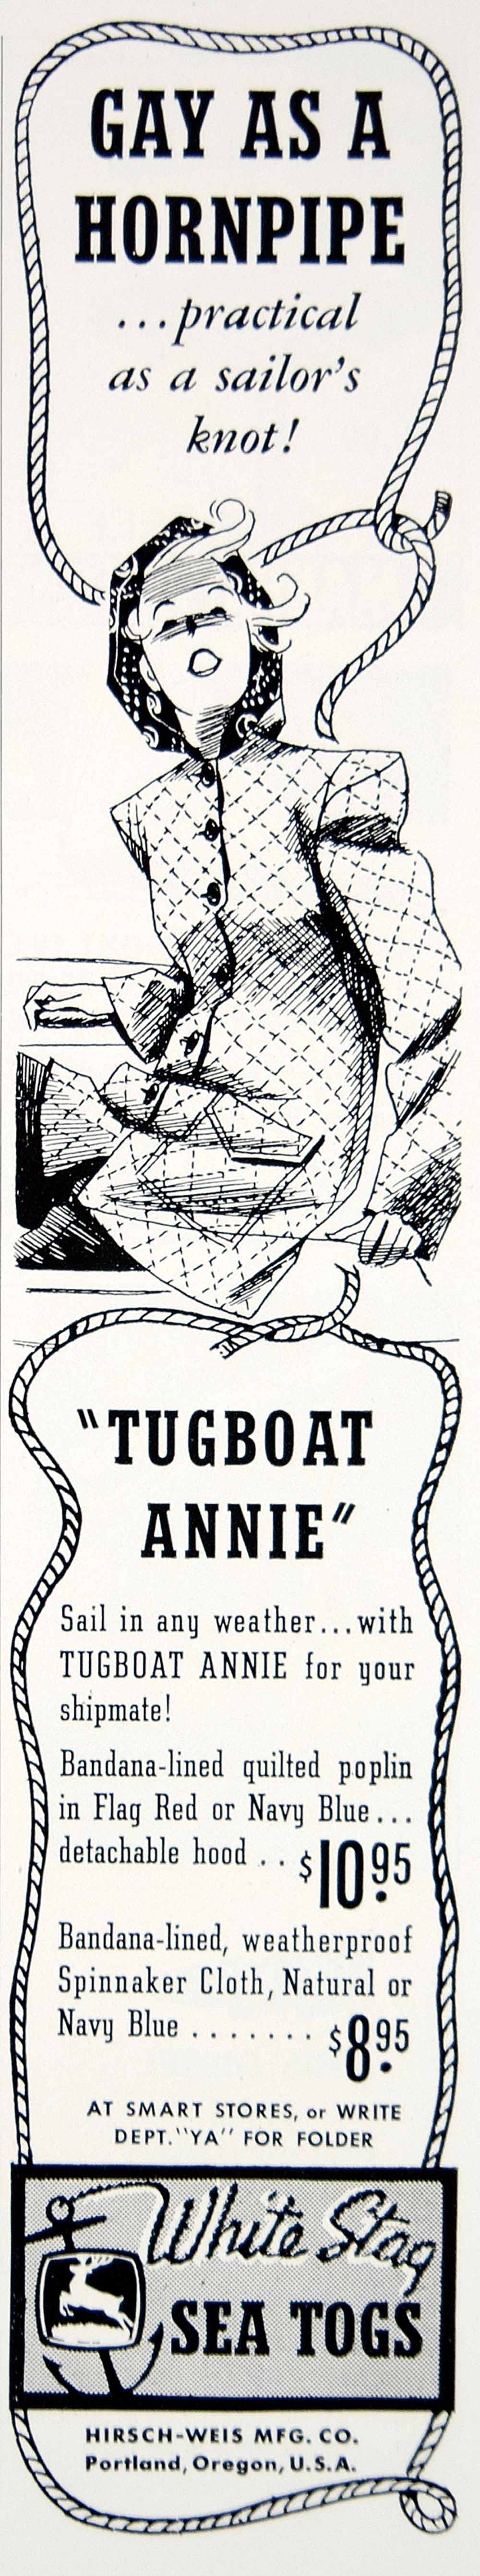 1940 Ad White Stag Sea Togs Nautical Fashion Jacket Hirsch-Weis Portland Oregon